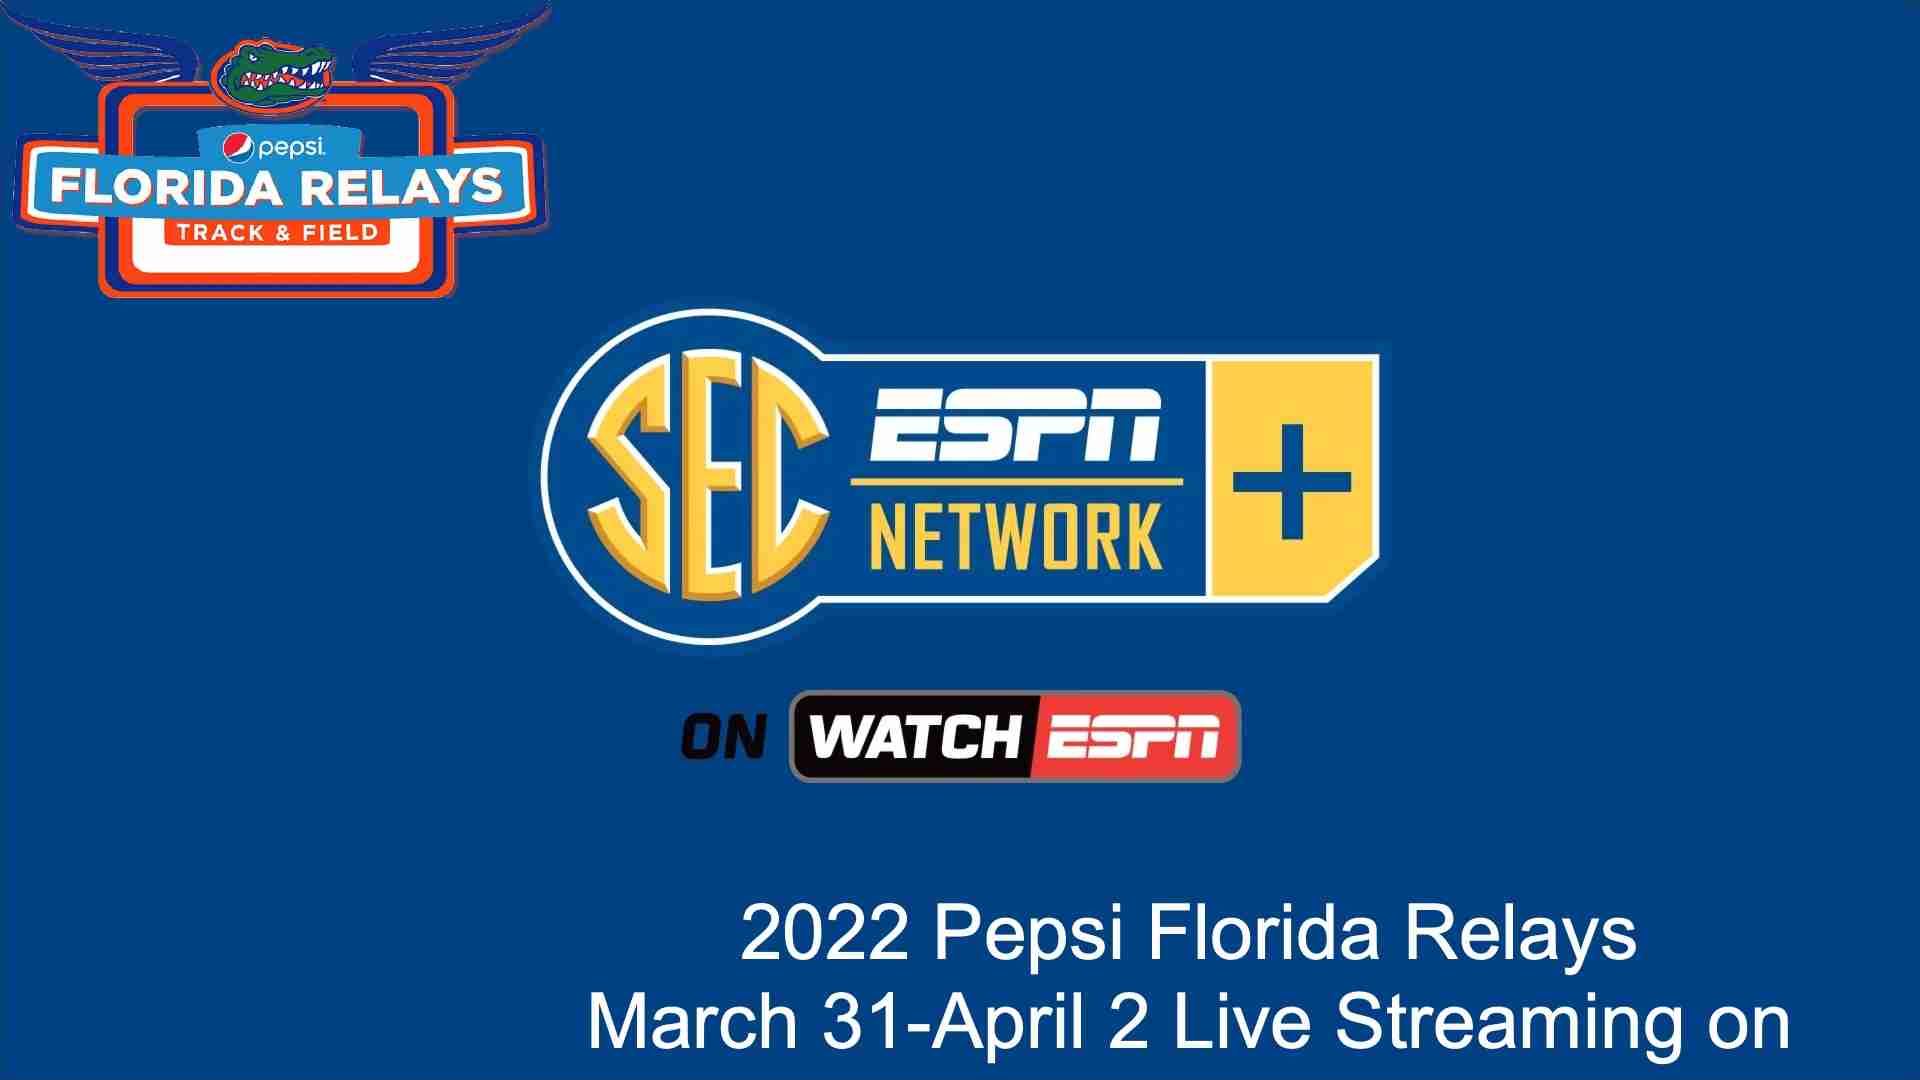 Pepsi-Florida-Relays-2022-Live-Streaming